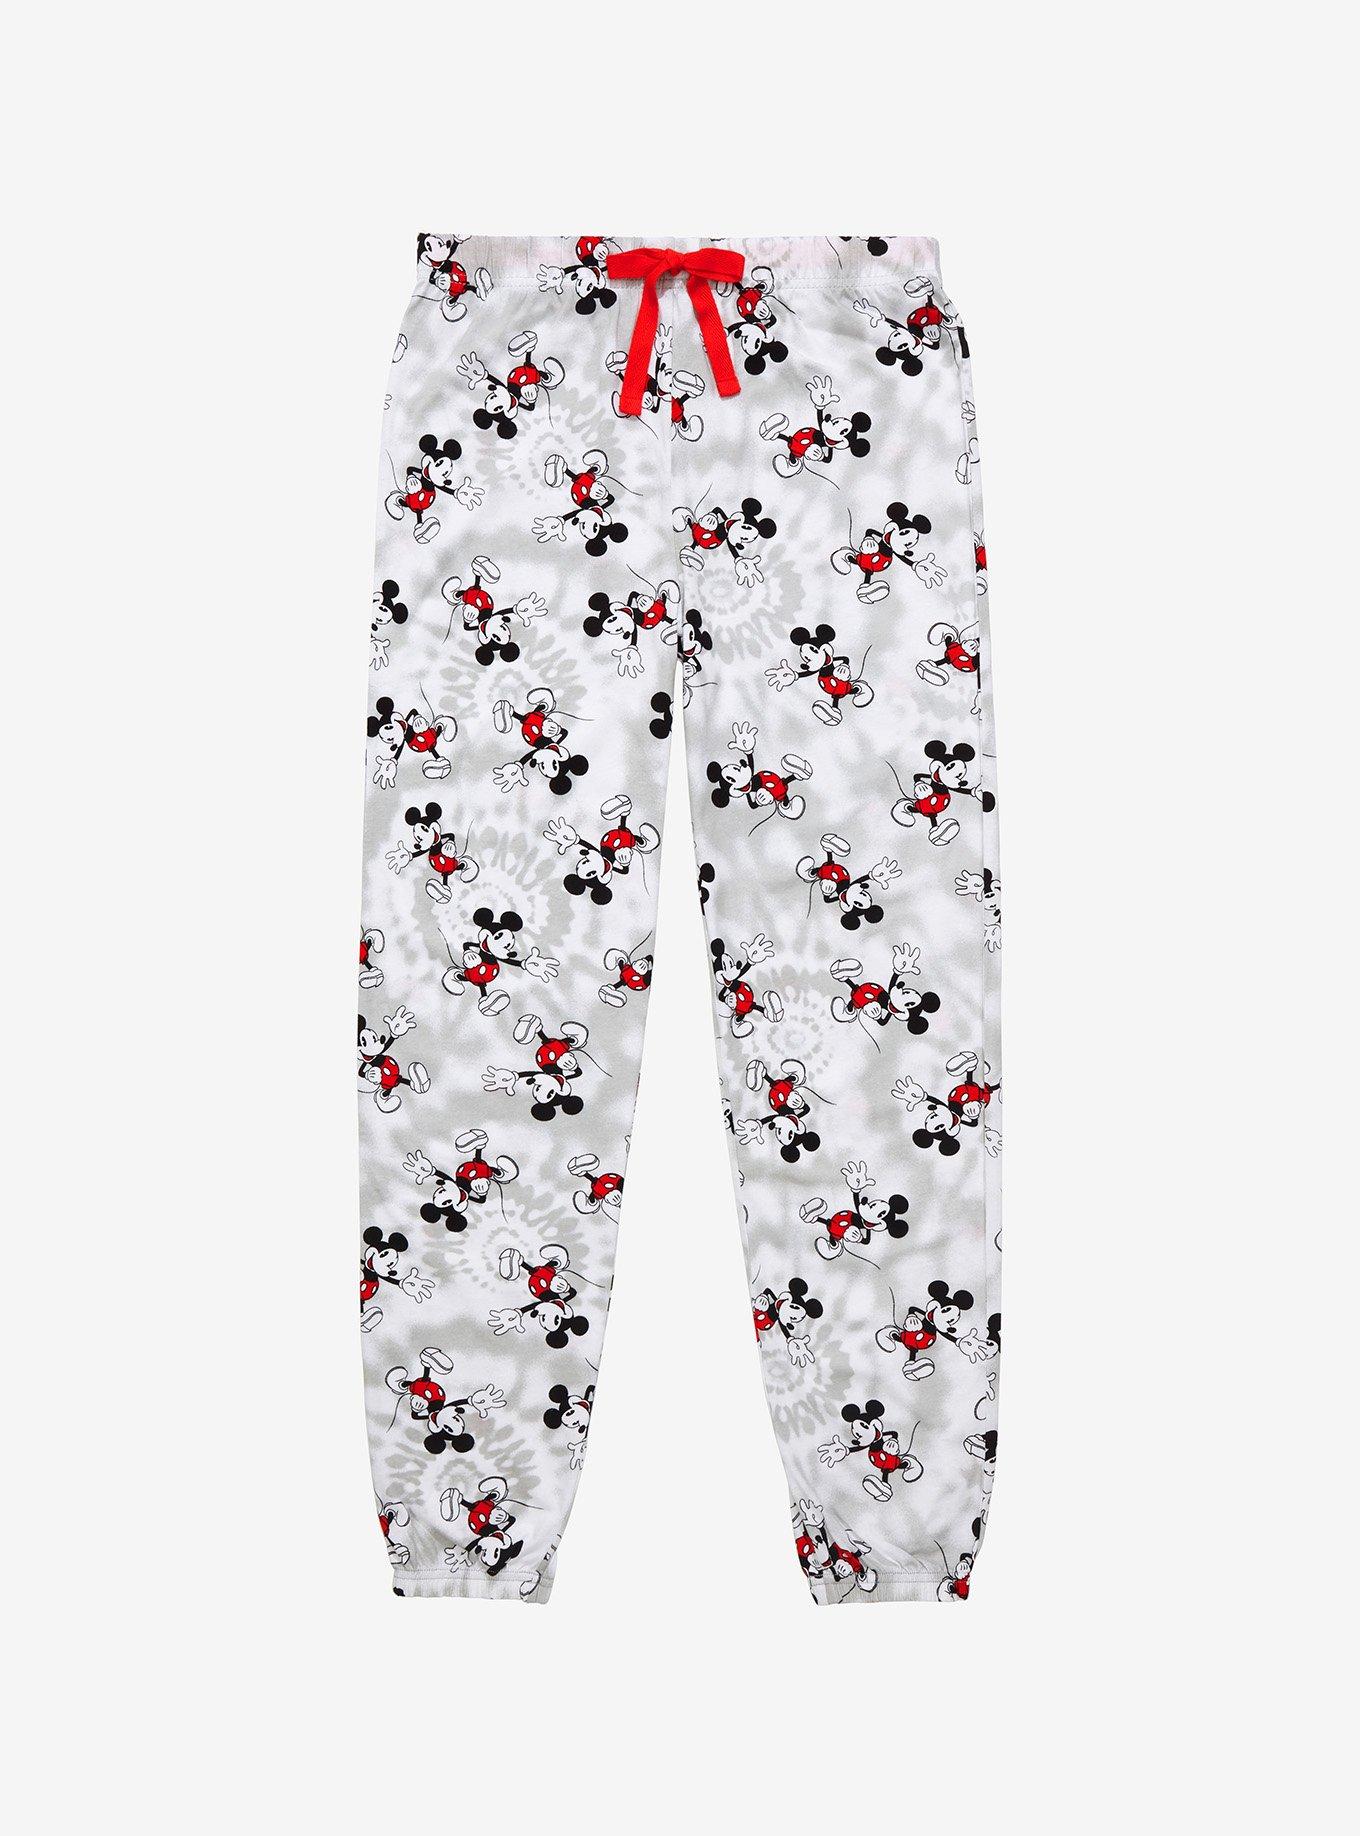 Disney Mickey Mouse Tie-Dye Jogger Lounge Pants, MULTI, hi-res